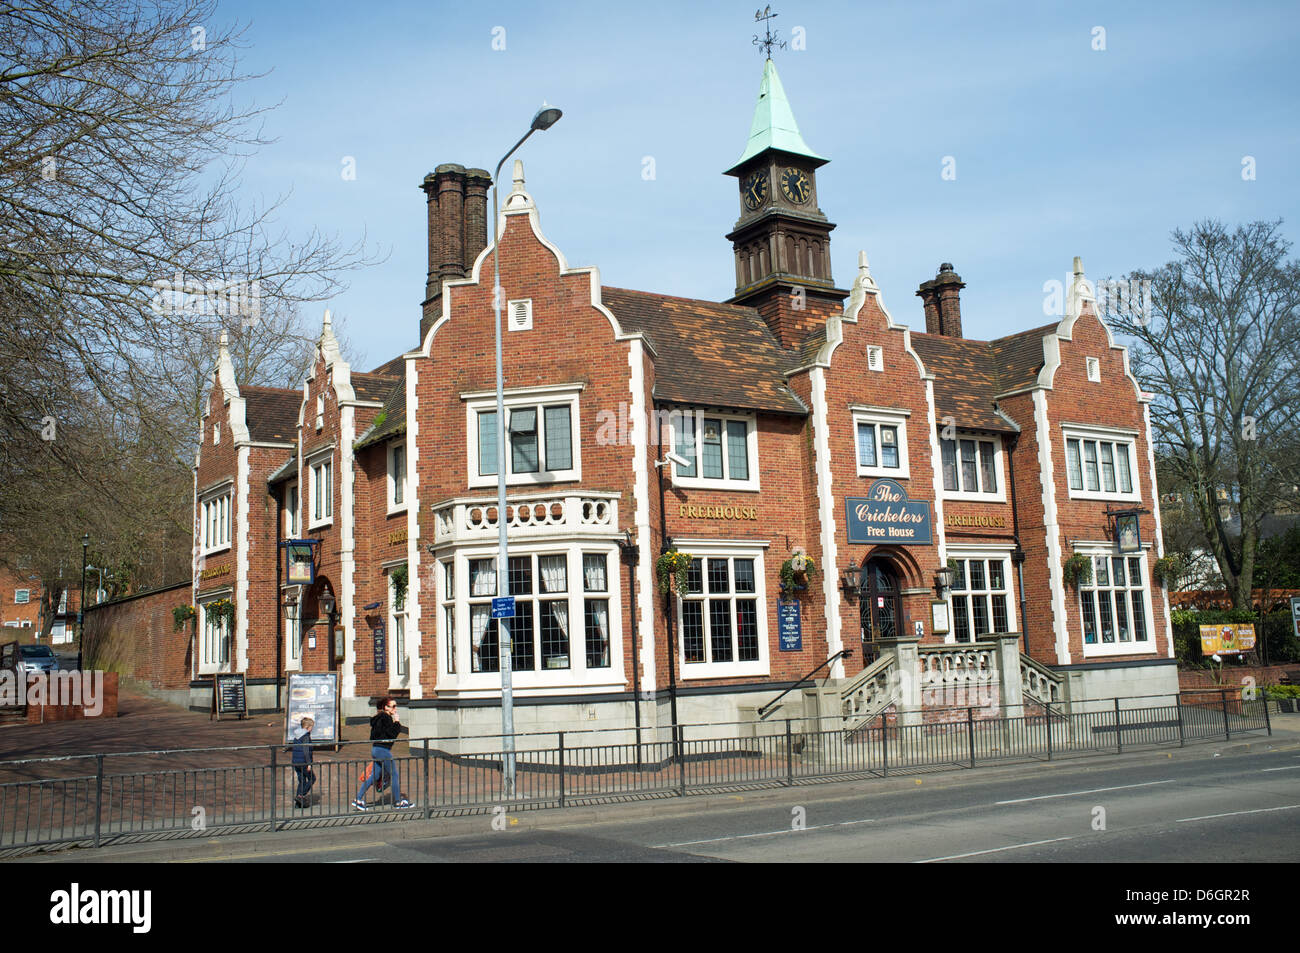 The Cricketers pub Ipswich, Suffolk, UK. Stock Photo